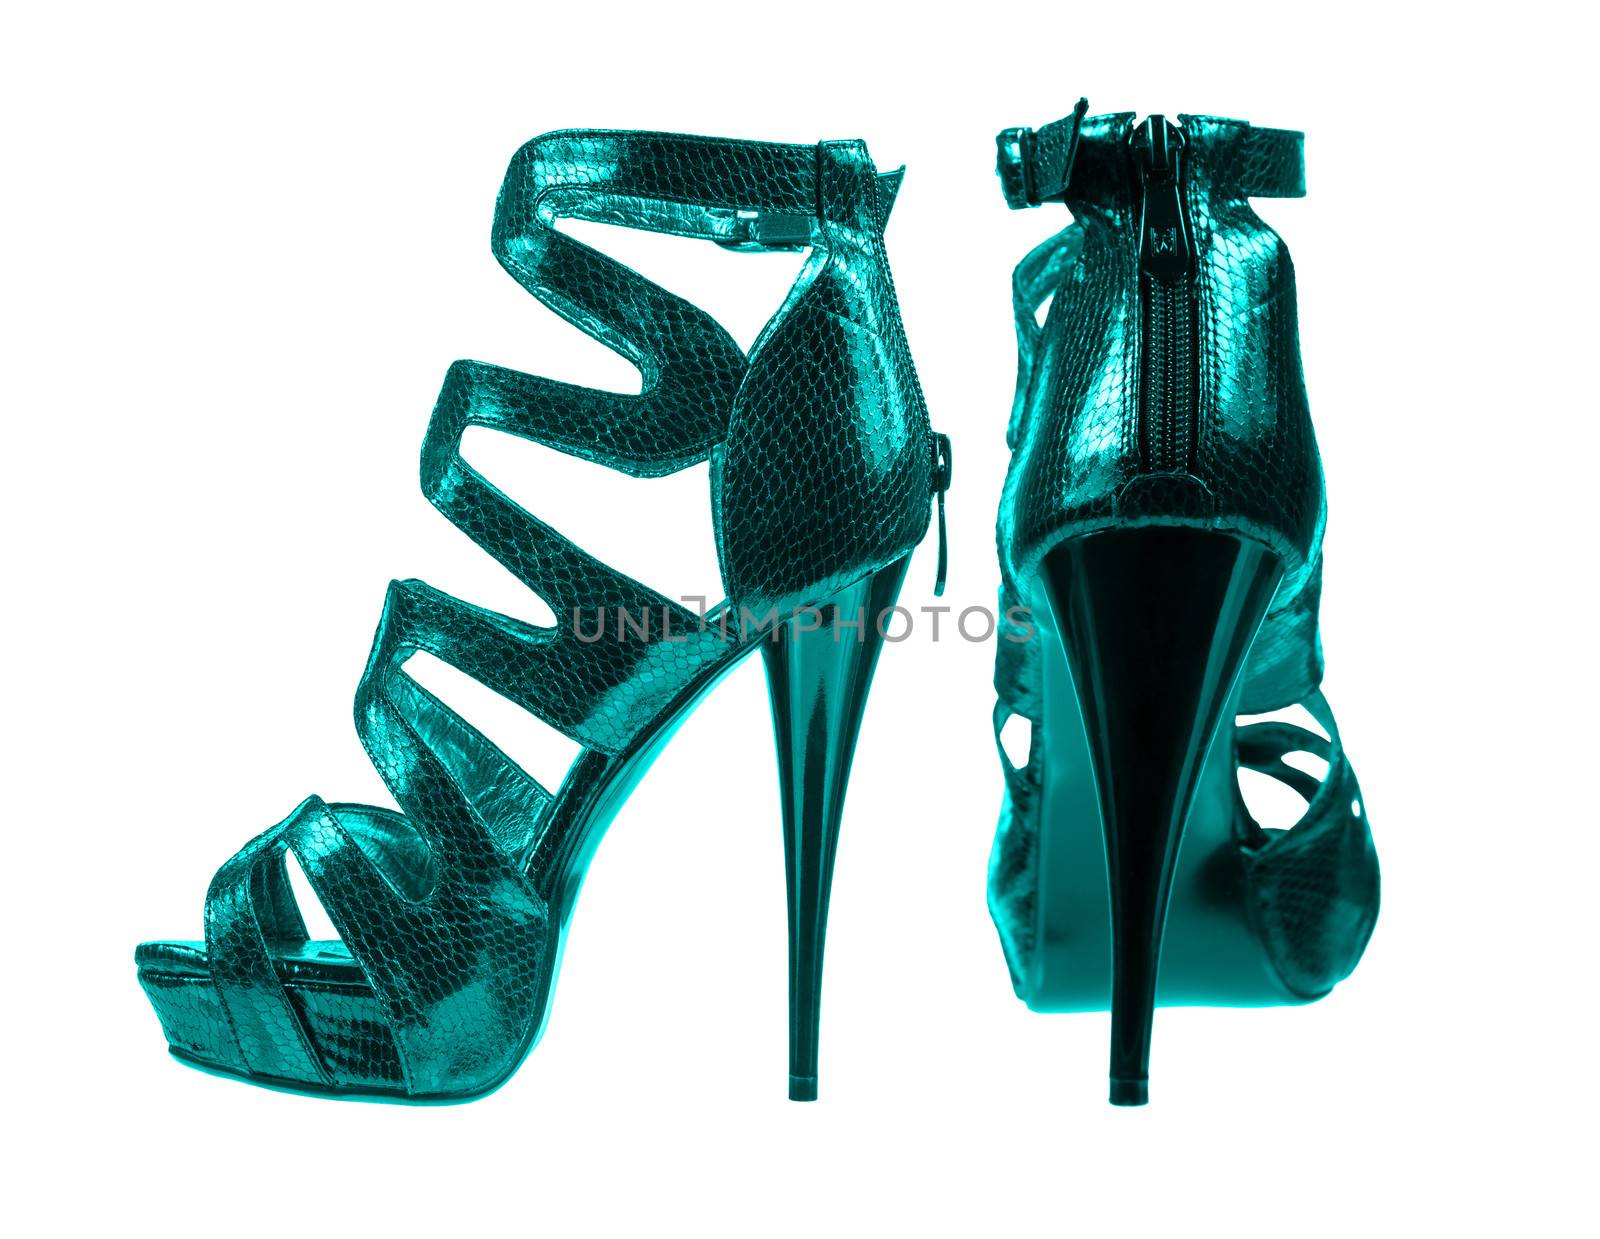 Women's shoes dark turquoise colors isolated on white background. Imitation crocodile skin. collage 